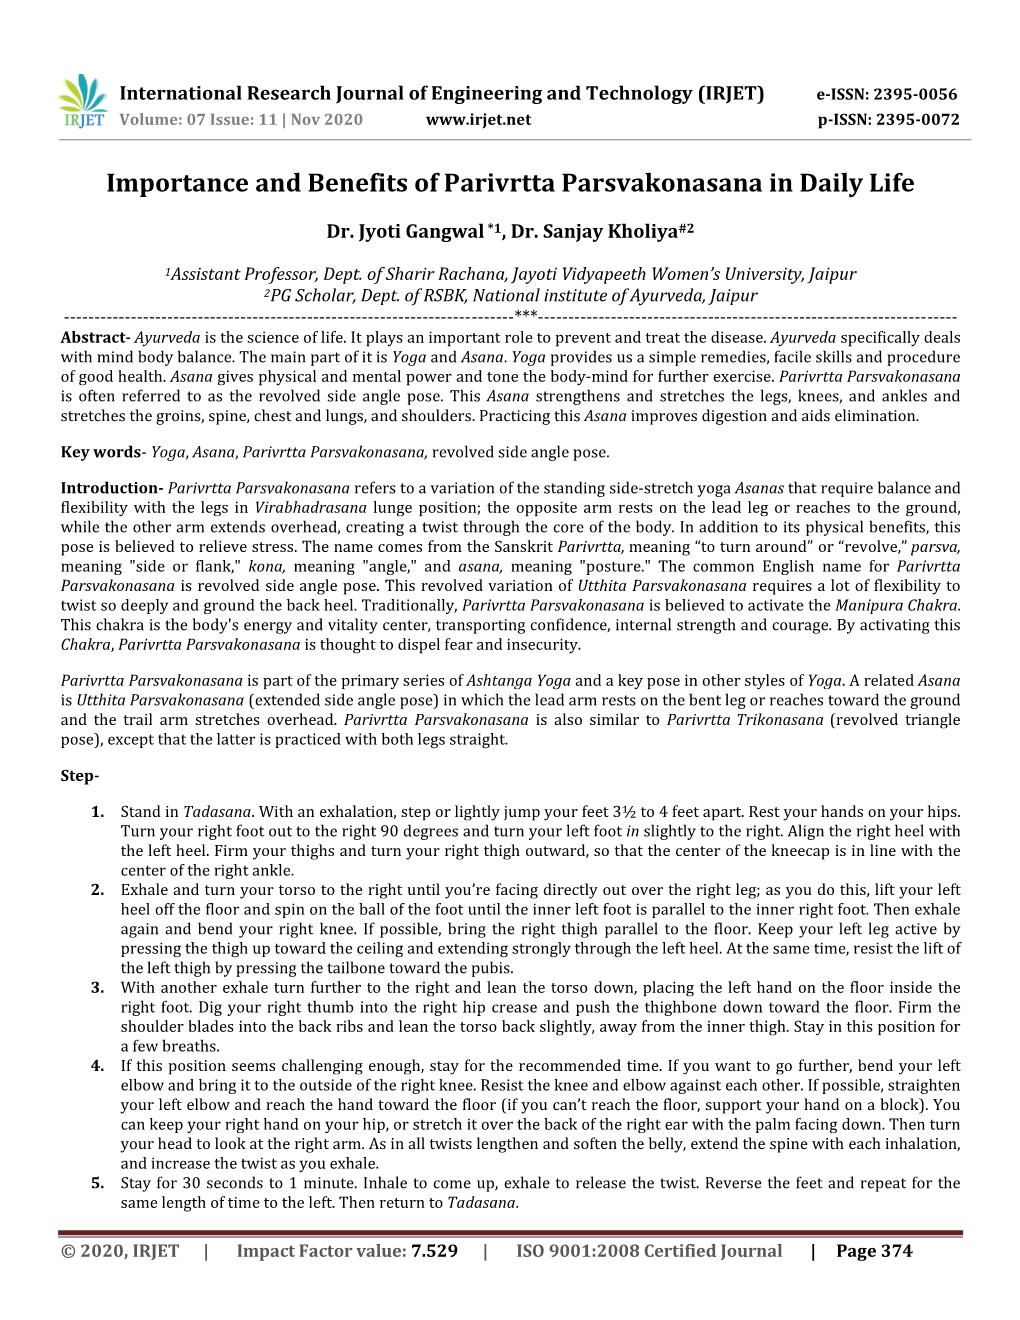 Importance and Benefits of Parivrtta Parsvakonasana in Daily Life